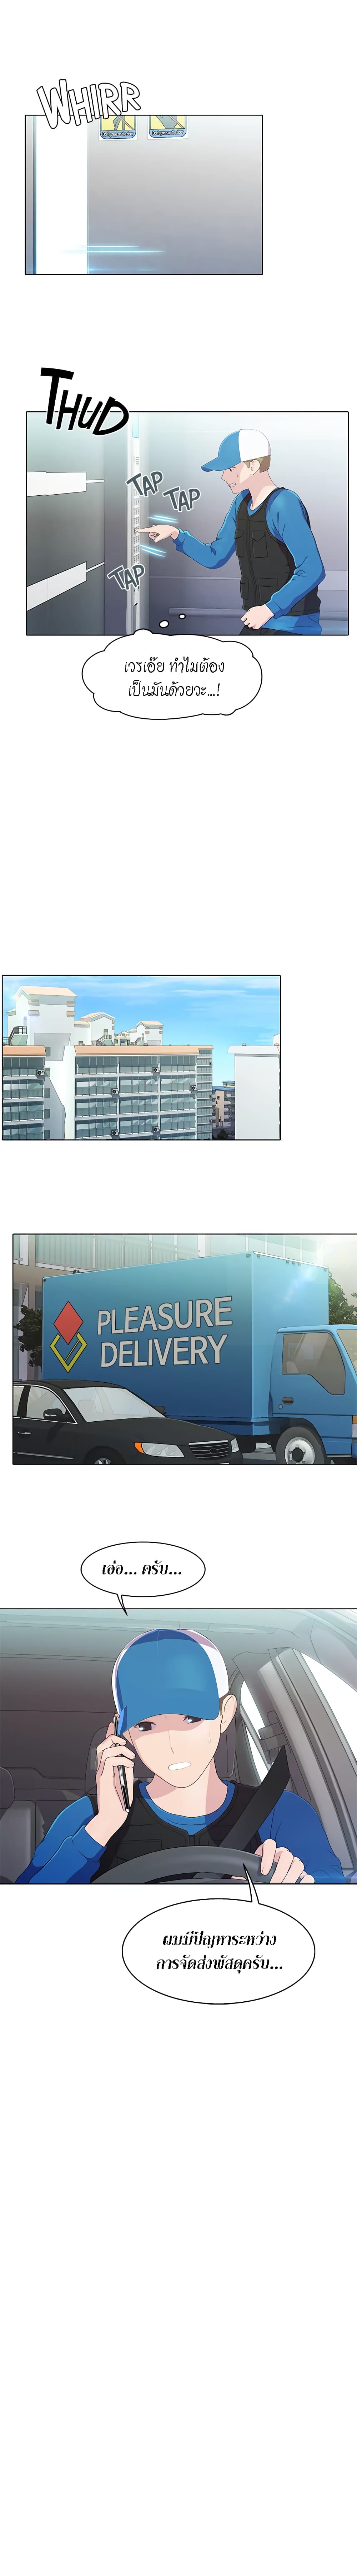 Pleasure Delivery 1-1